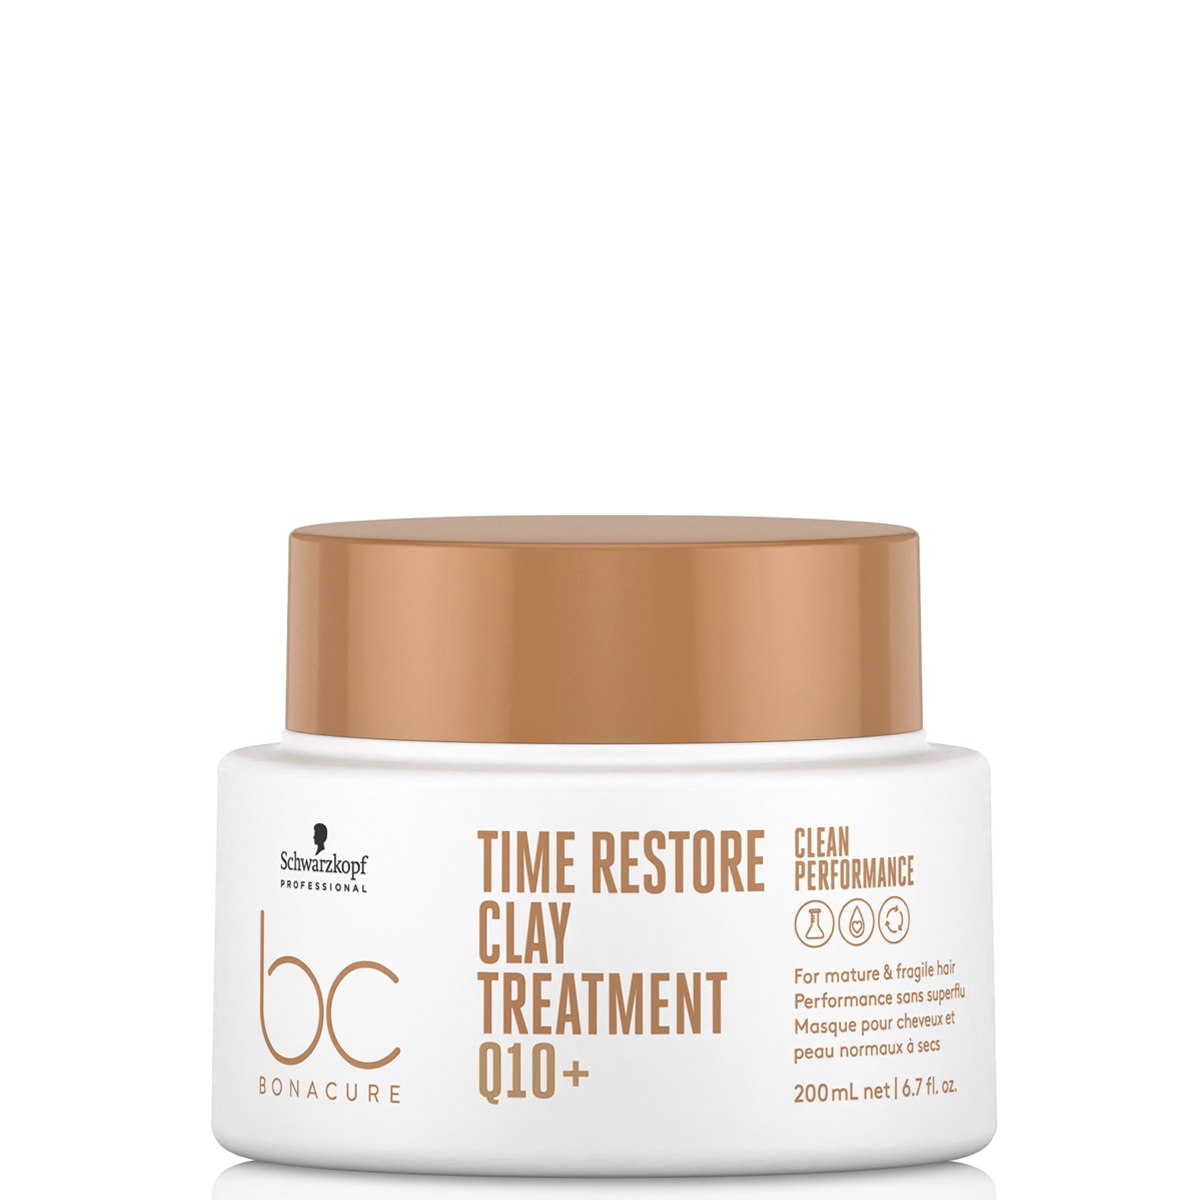 BC Bonacure Time Restore Clay Treatment Q10+, 200 ml - Hairsale.se